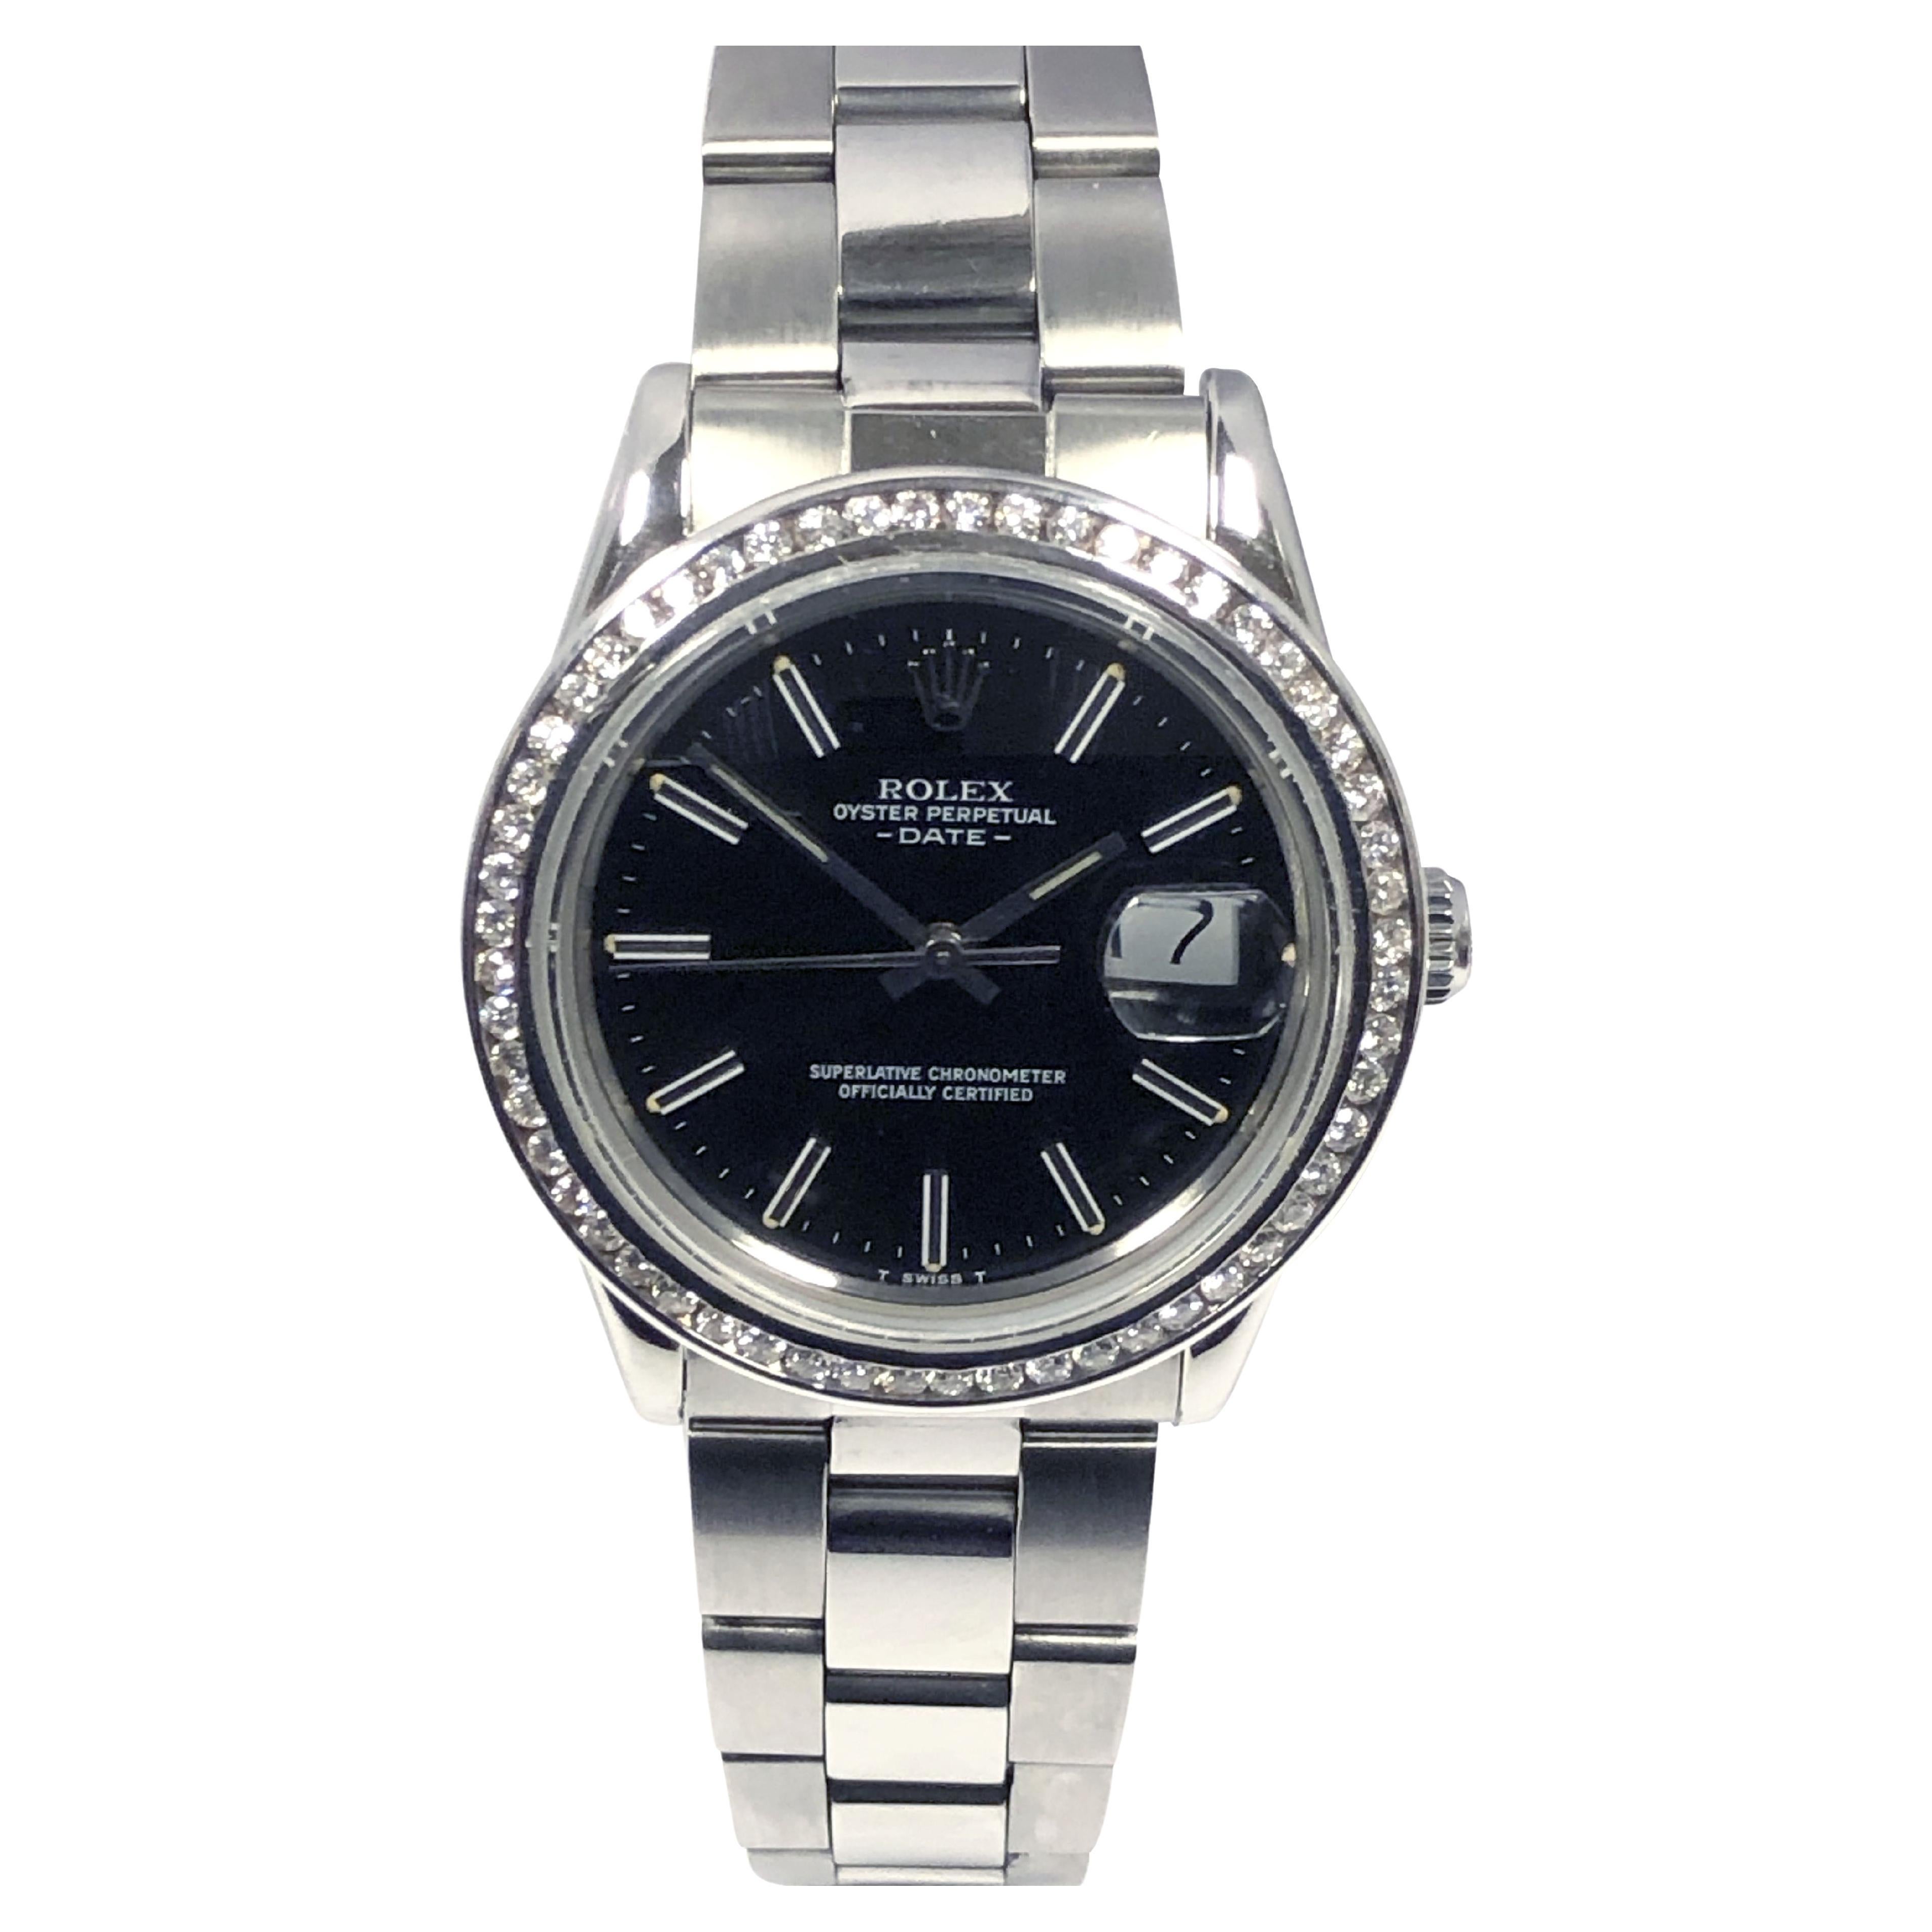 Rolex Steel Date Model Automatic Wrist Watch with Diamond Bezel For Sale